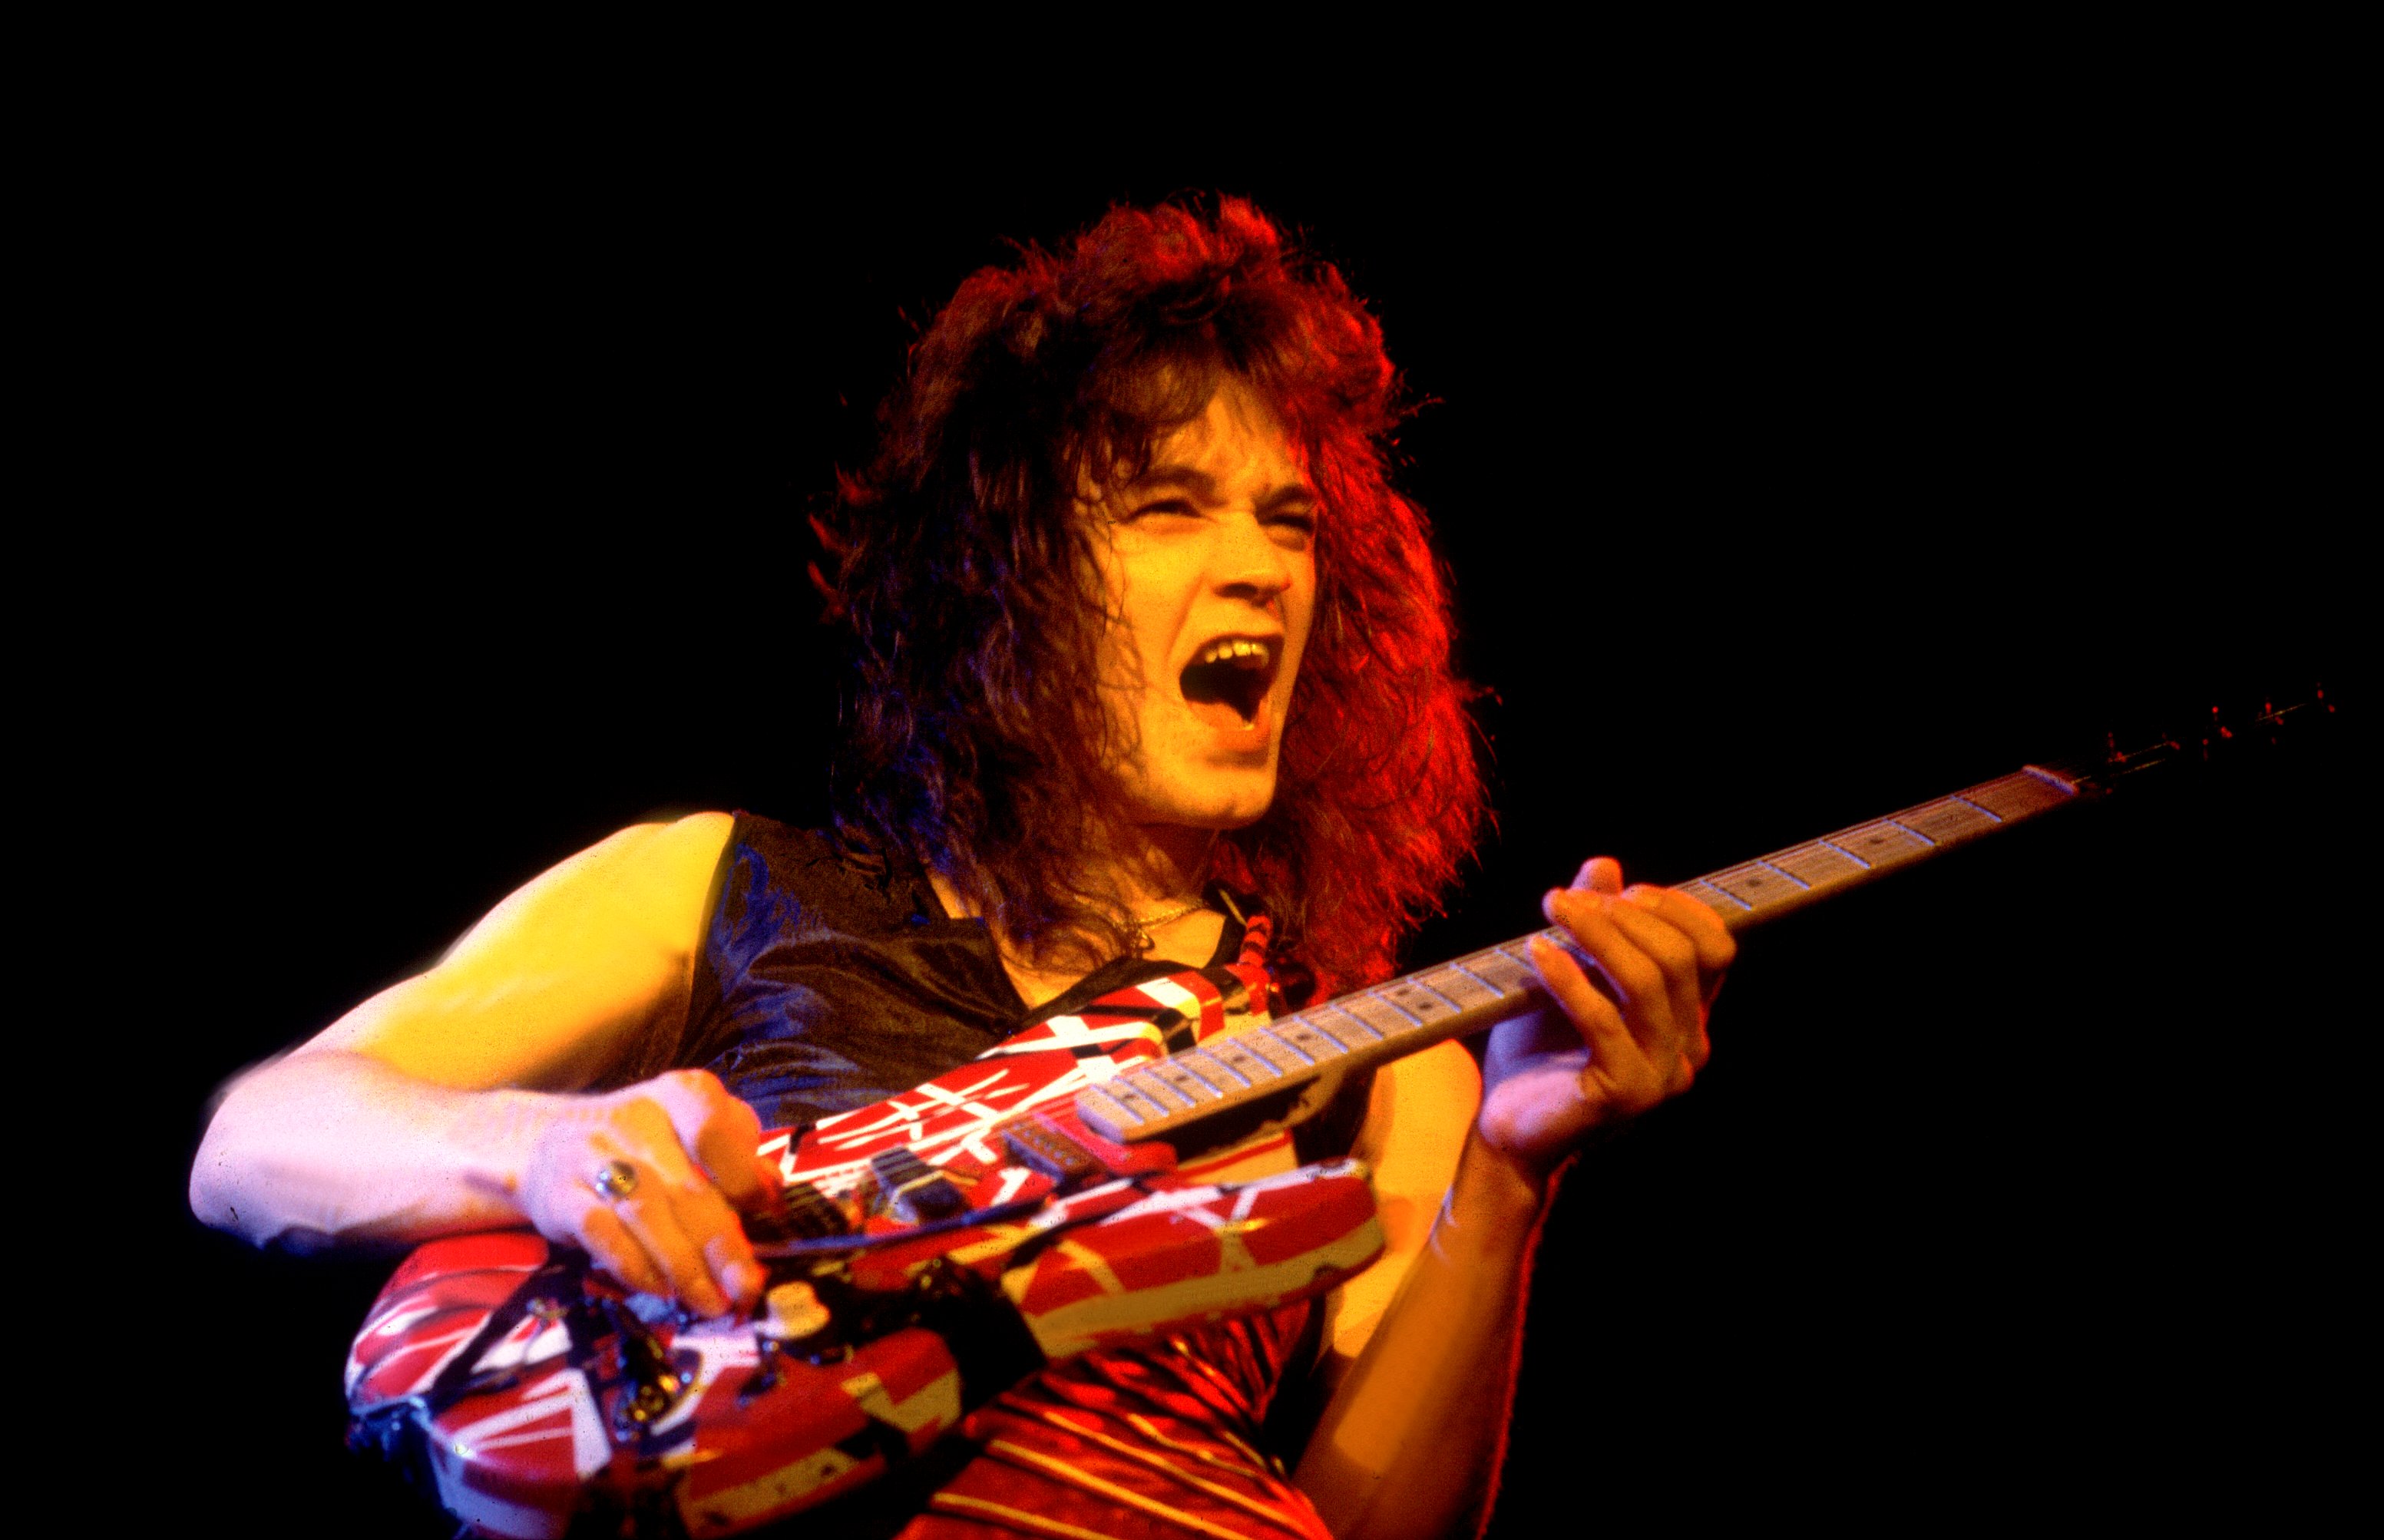 Dutch-born American Rock musician Eddie Van Halen (1955 - 2020), of the group Van Halen, performs onstage at the Aragon Ballroom, Chicago, Illinois, April 26, 1979.